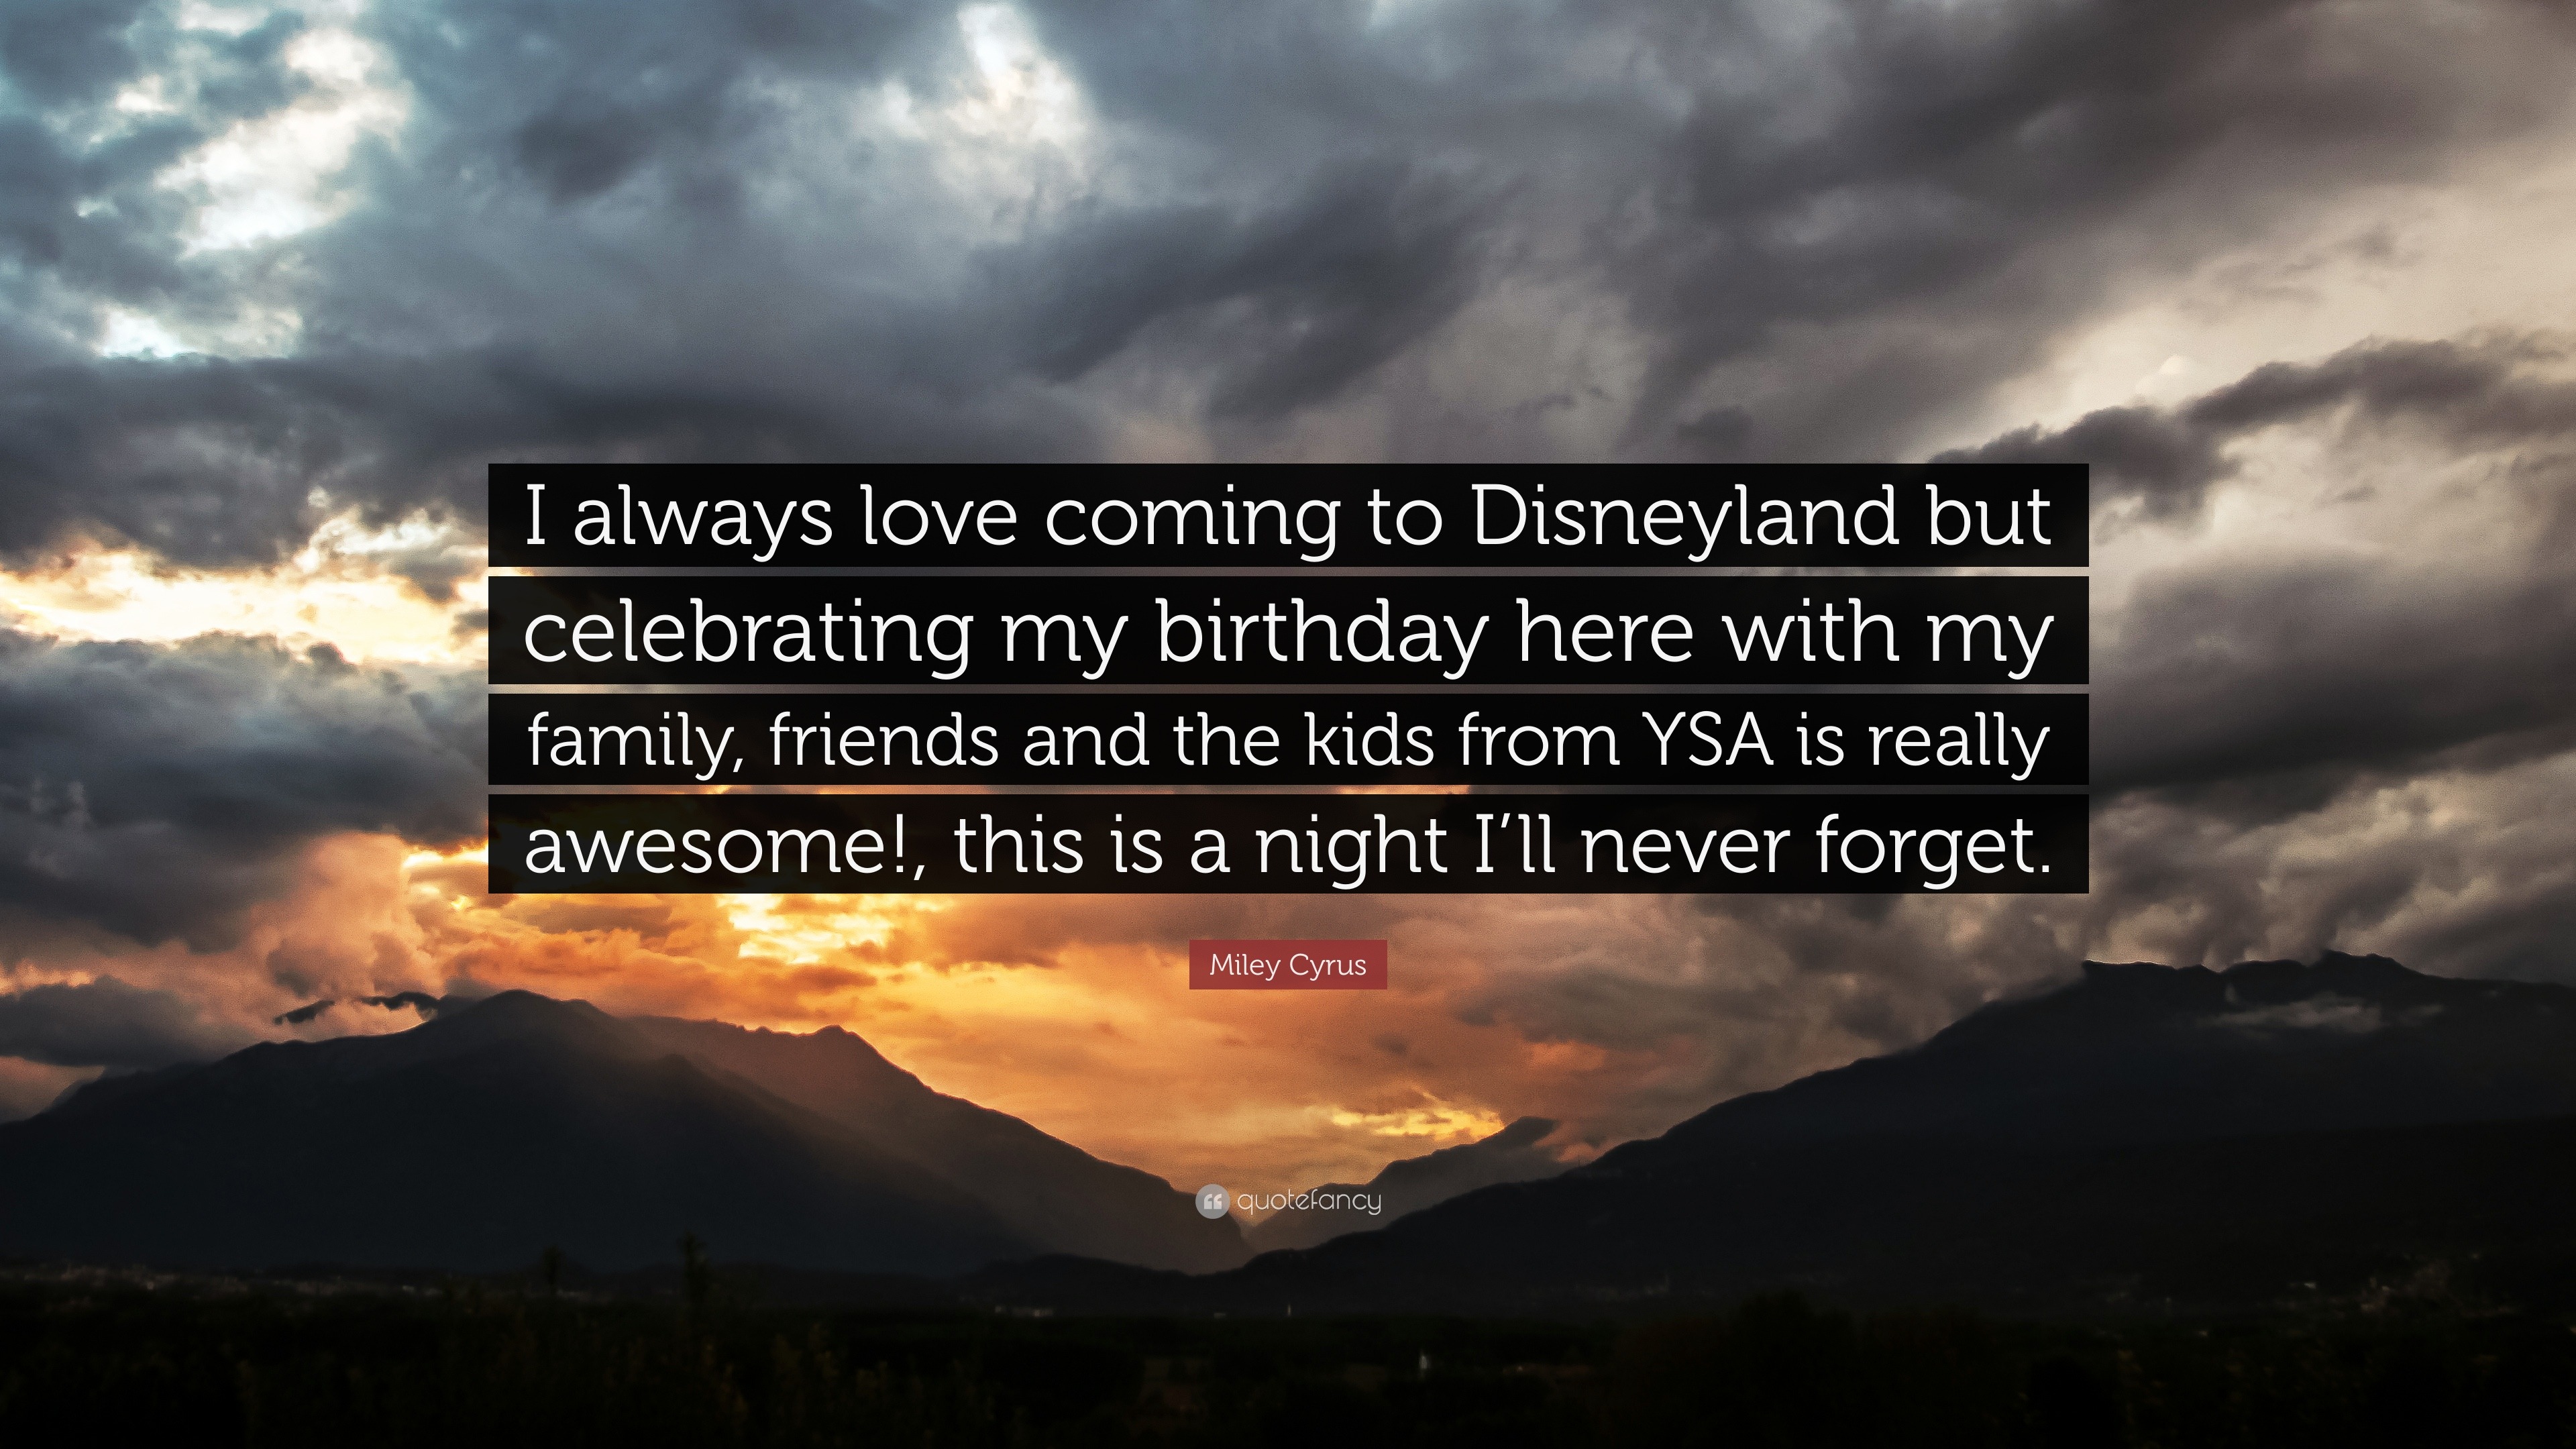 Miley Cyrus Quote “I always love ing to Disneyland but celebrating my birthday here